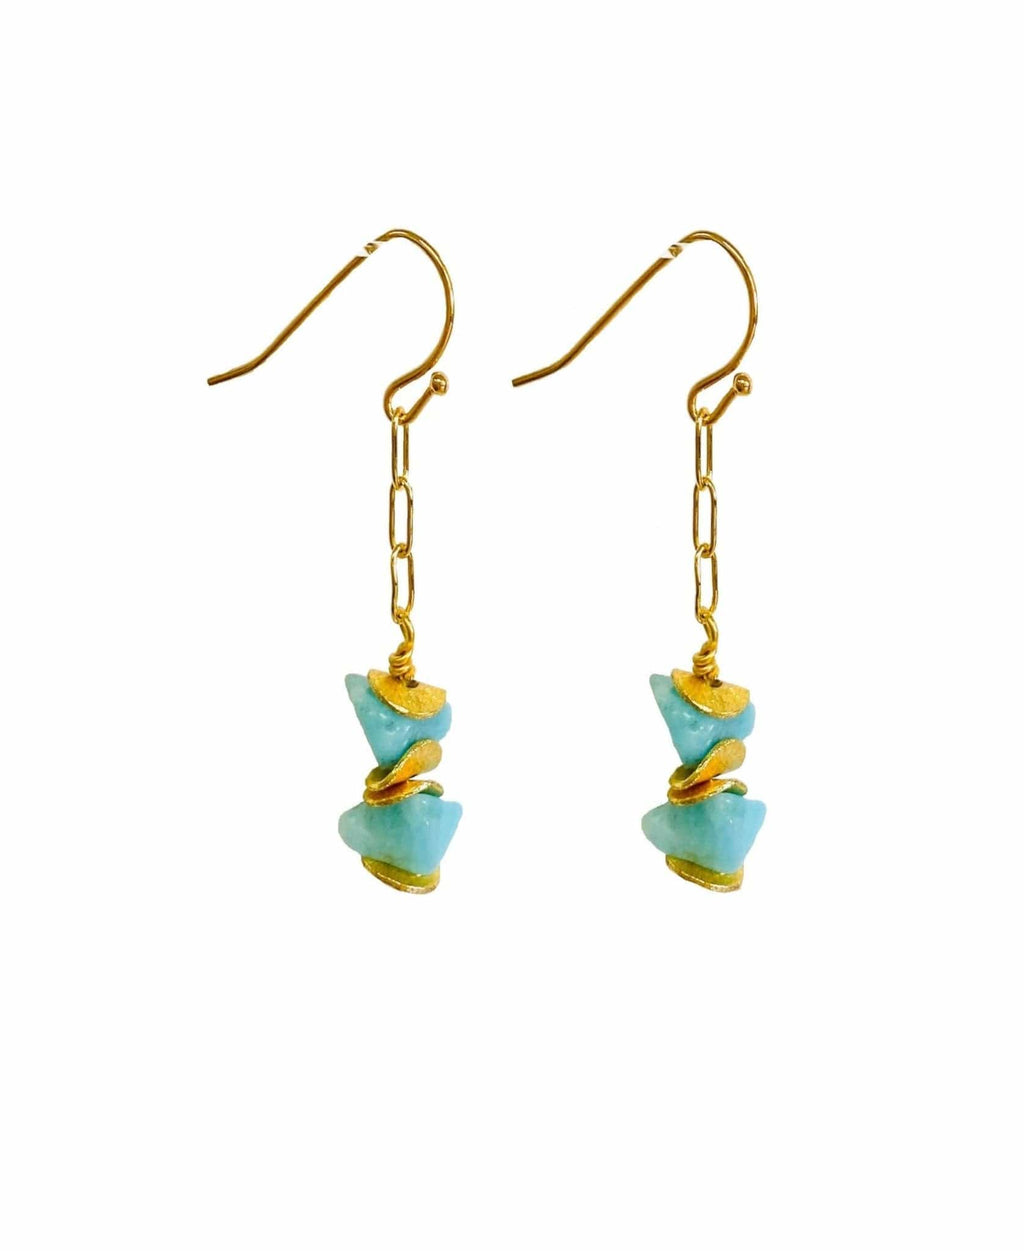 MINU Jewels Earrings Amazonite Nefatari 1.5" Drop Gold Chain Earrings With Amazonite or Turquoise